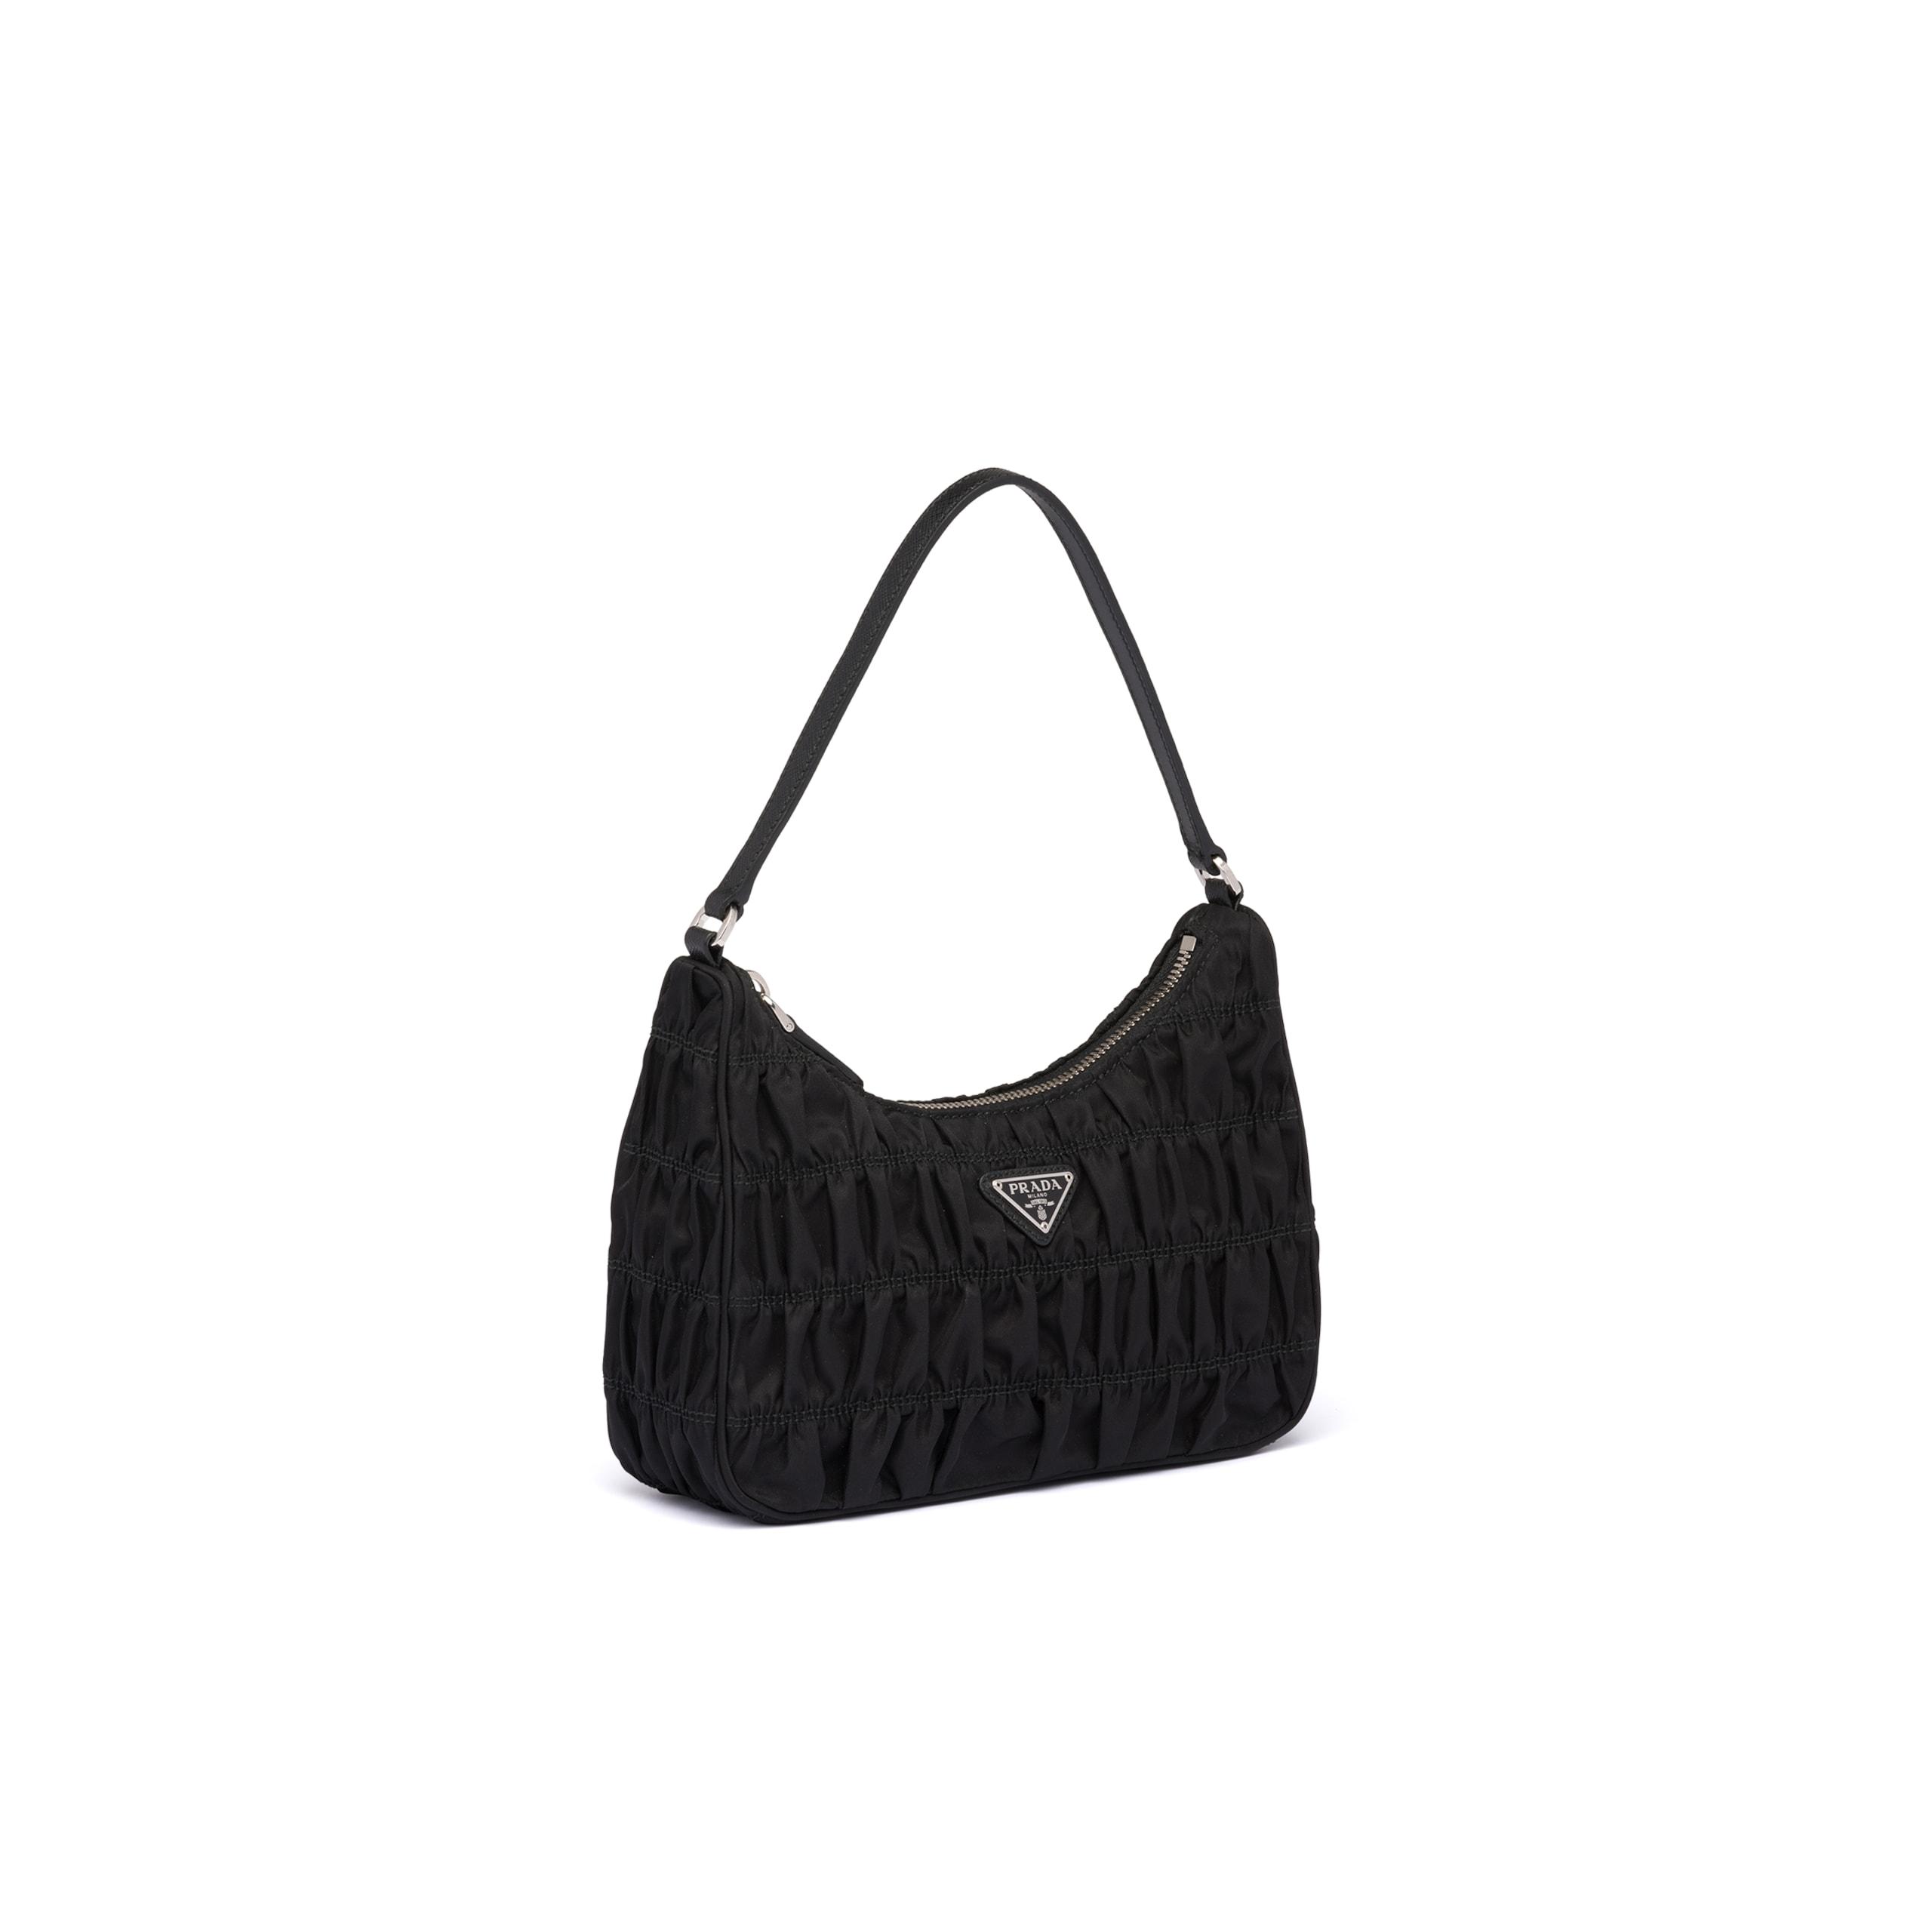 Prada Synthetic Nylon And Saffiano Leather Mini Bag in Black - Lyst